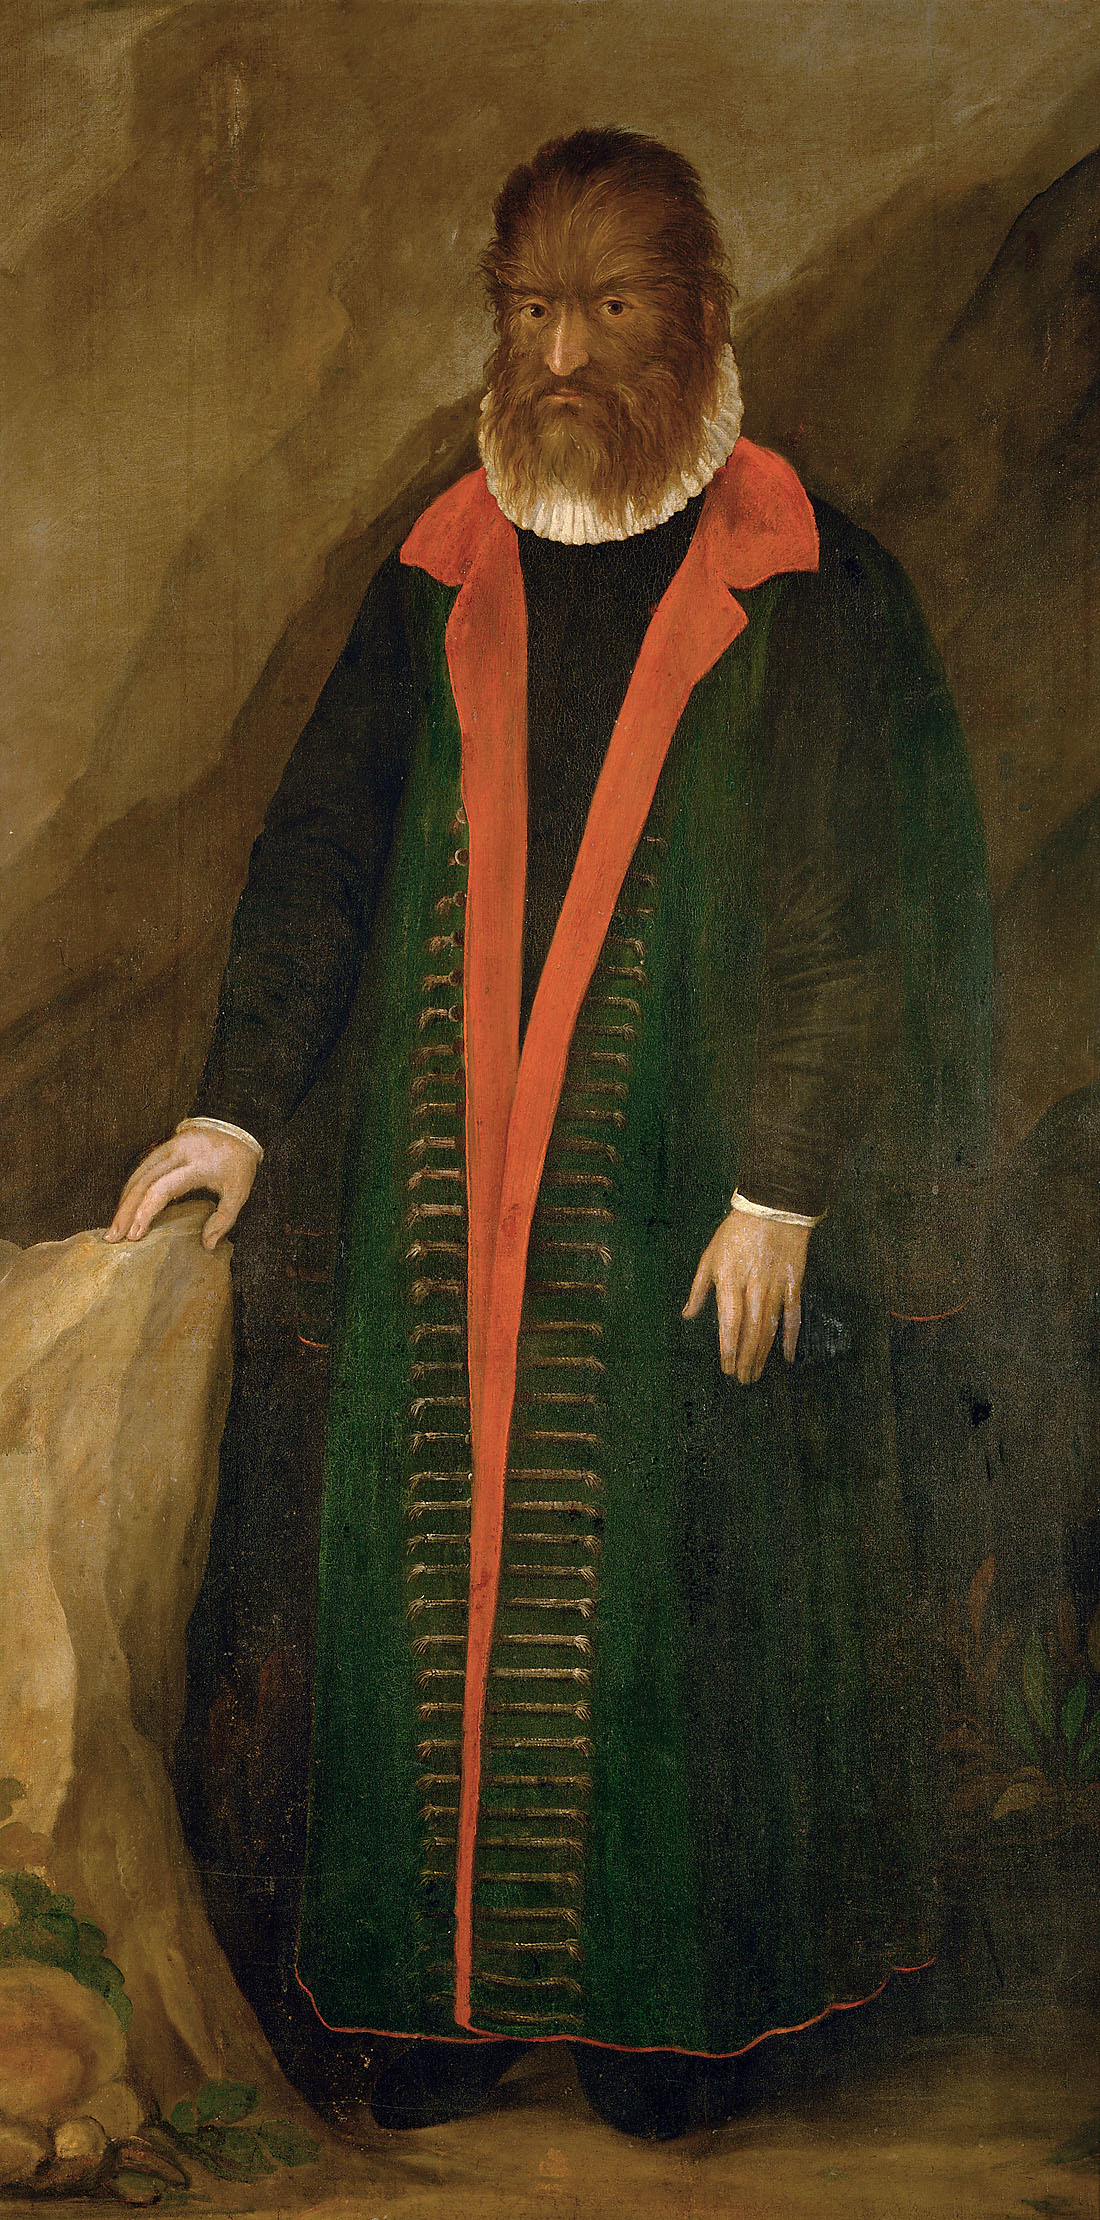 Волохата людина, Петрус Гонсалвус by Unknown Artist - 1580 